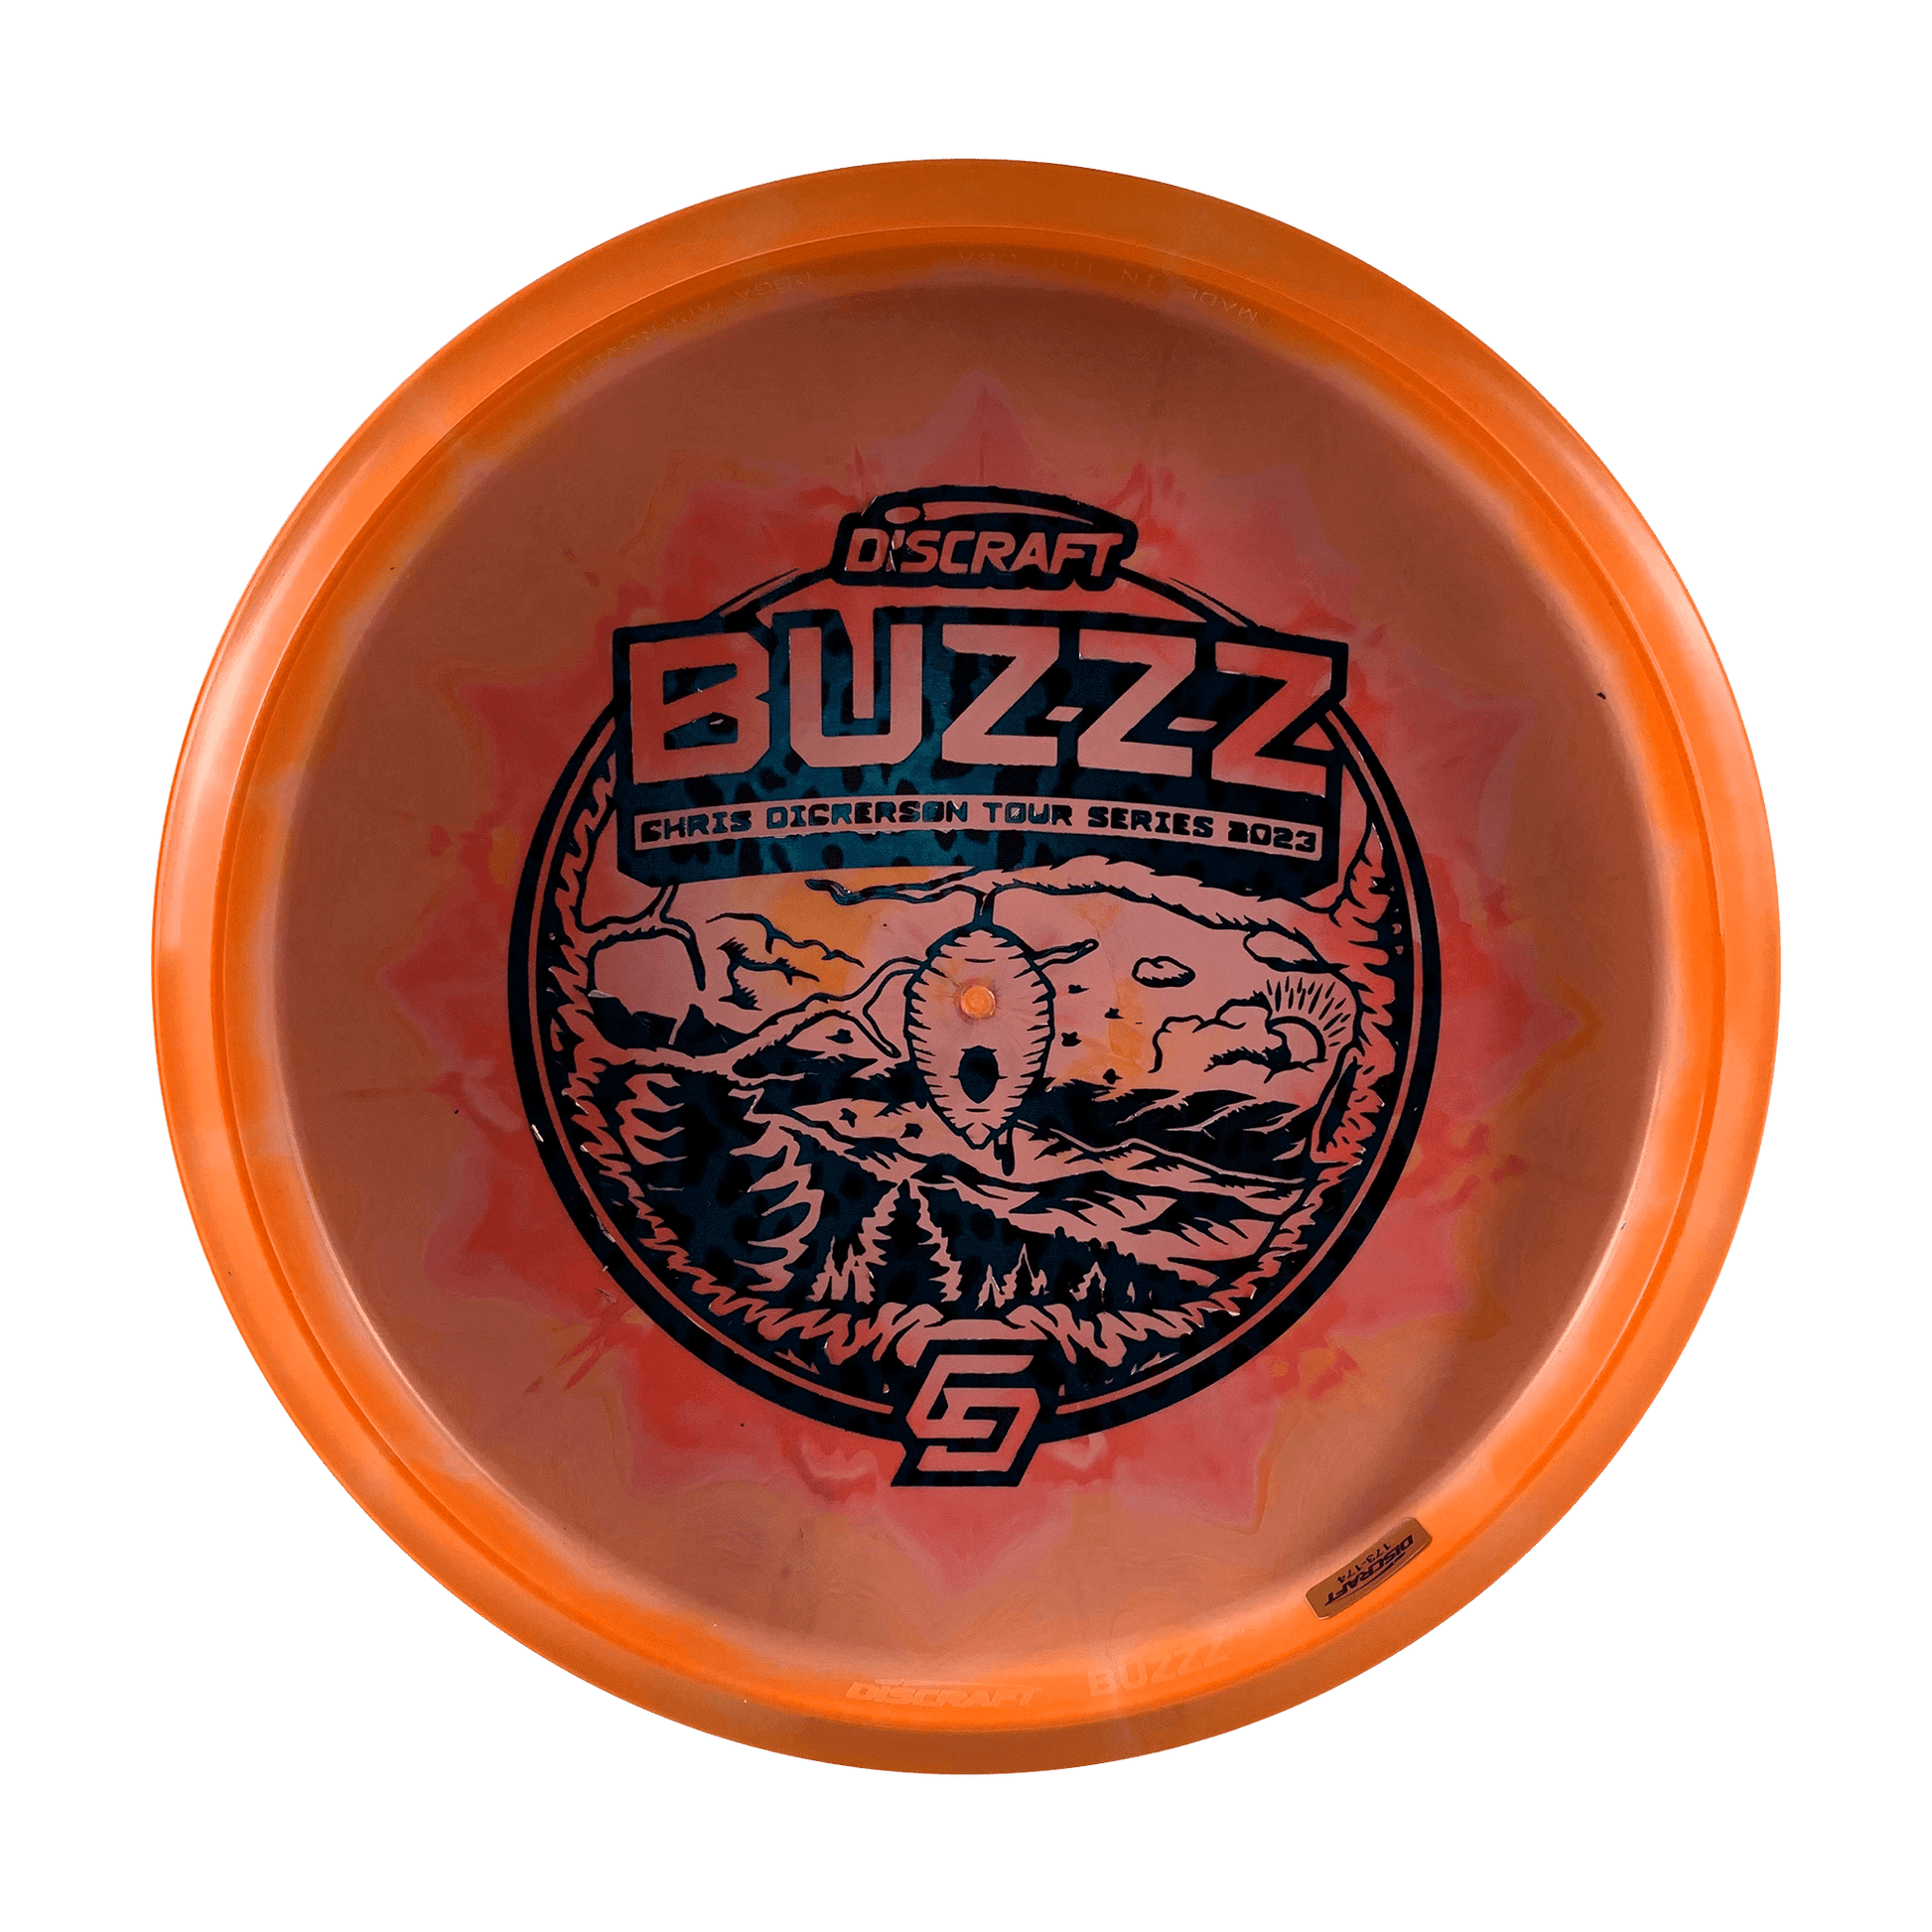 ESP Swirl Buzzz - Chris Dickerson Tour Series 2023 Disc Discraft multi / orange 173 